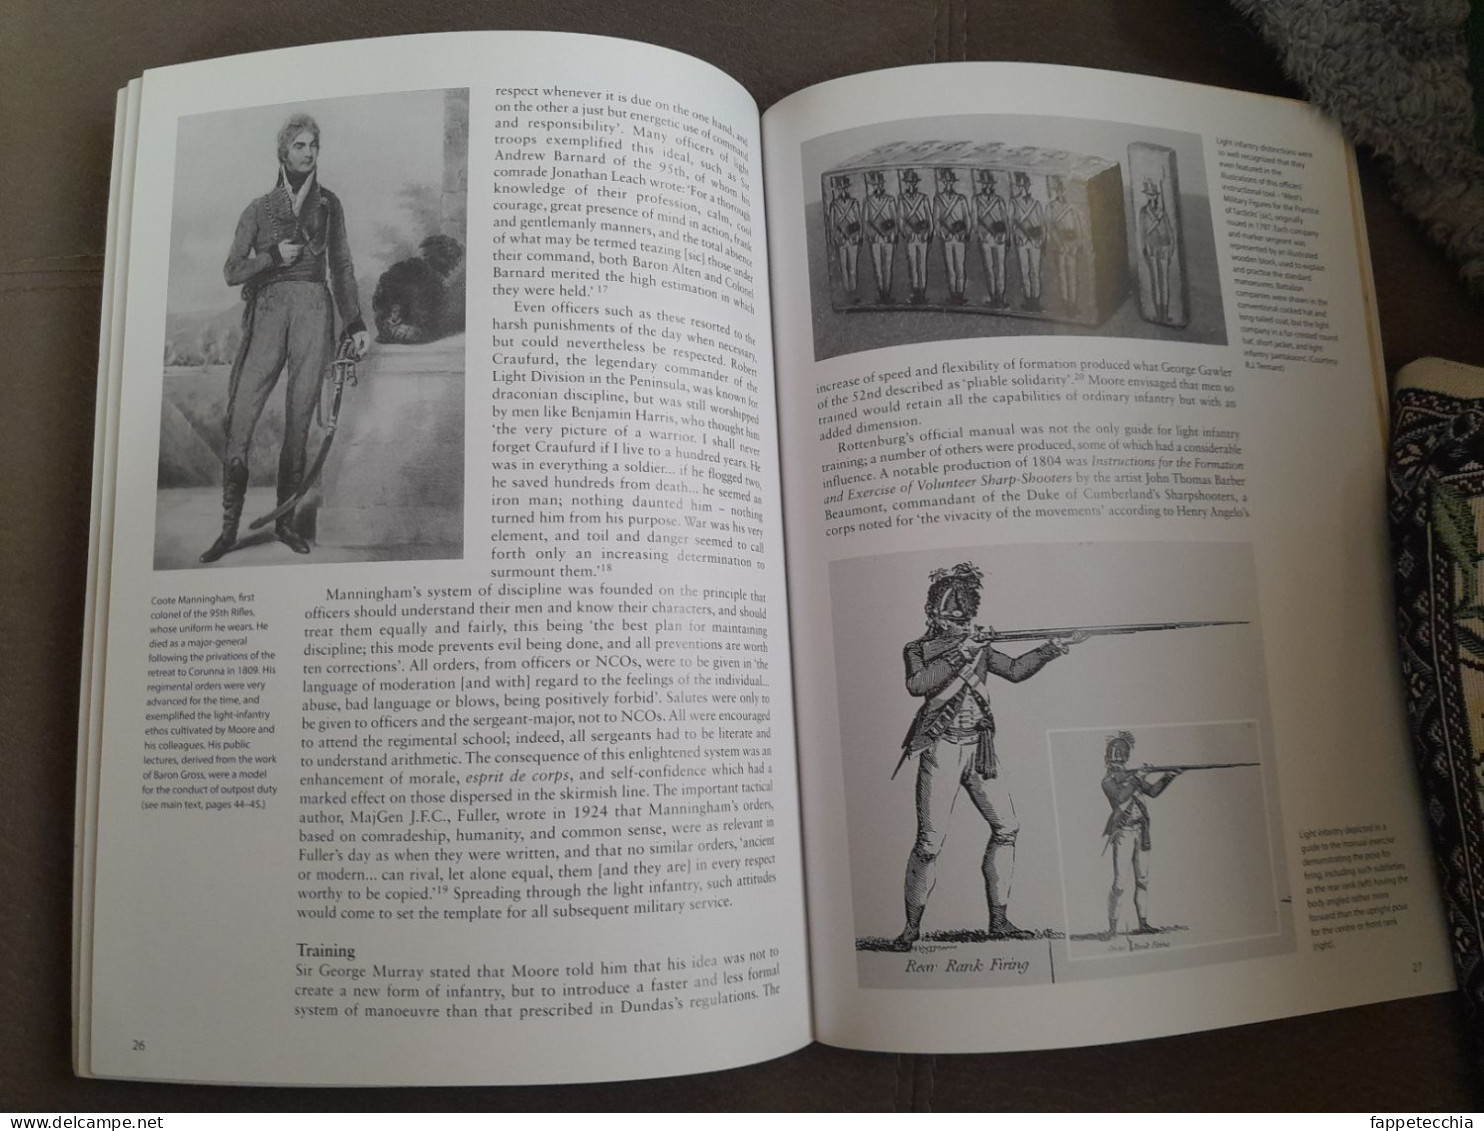 British Light Infantry & Rifle Tactics Of The Napoleonic Wars - OSPREY PUBLISHING - Armée Britannique